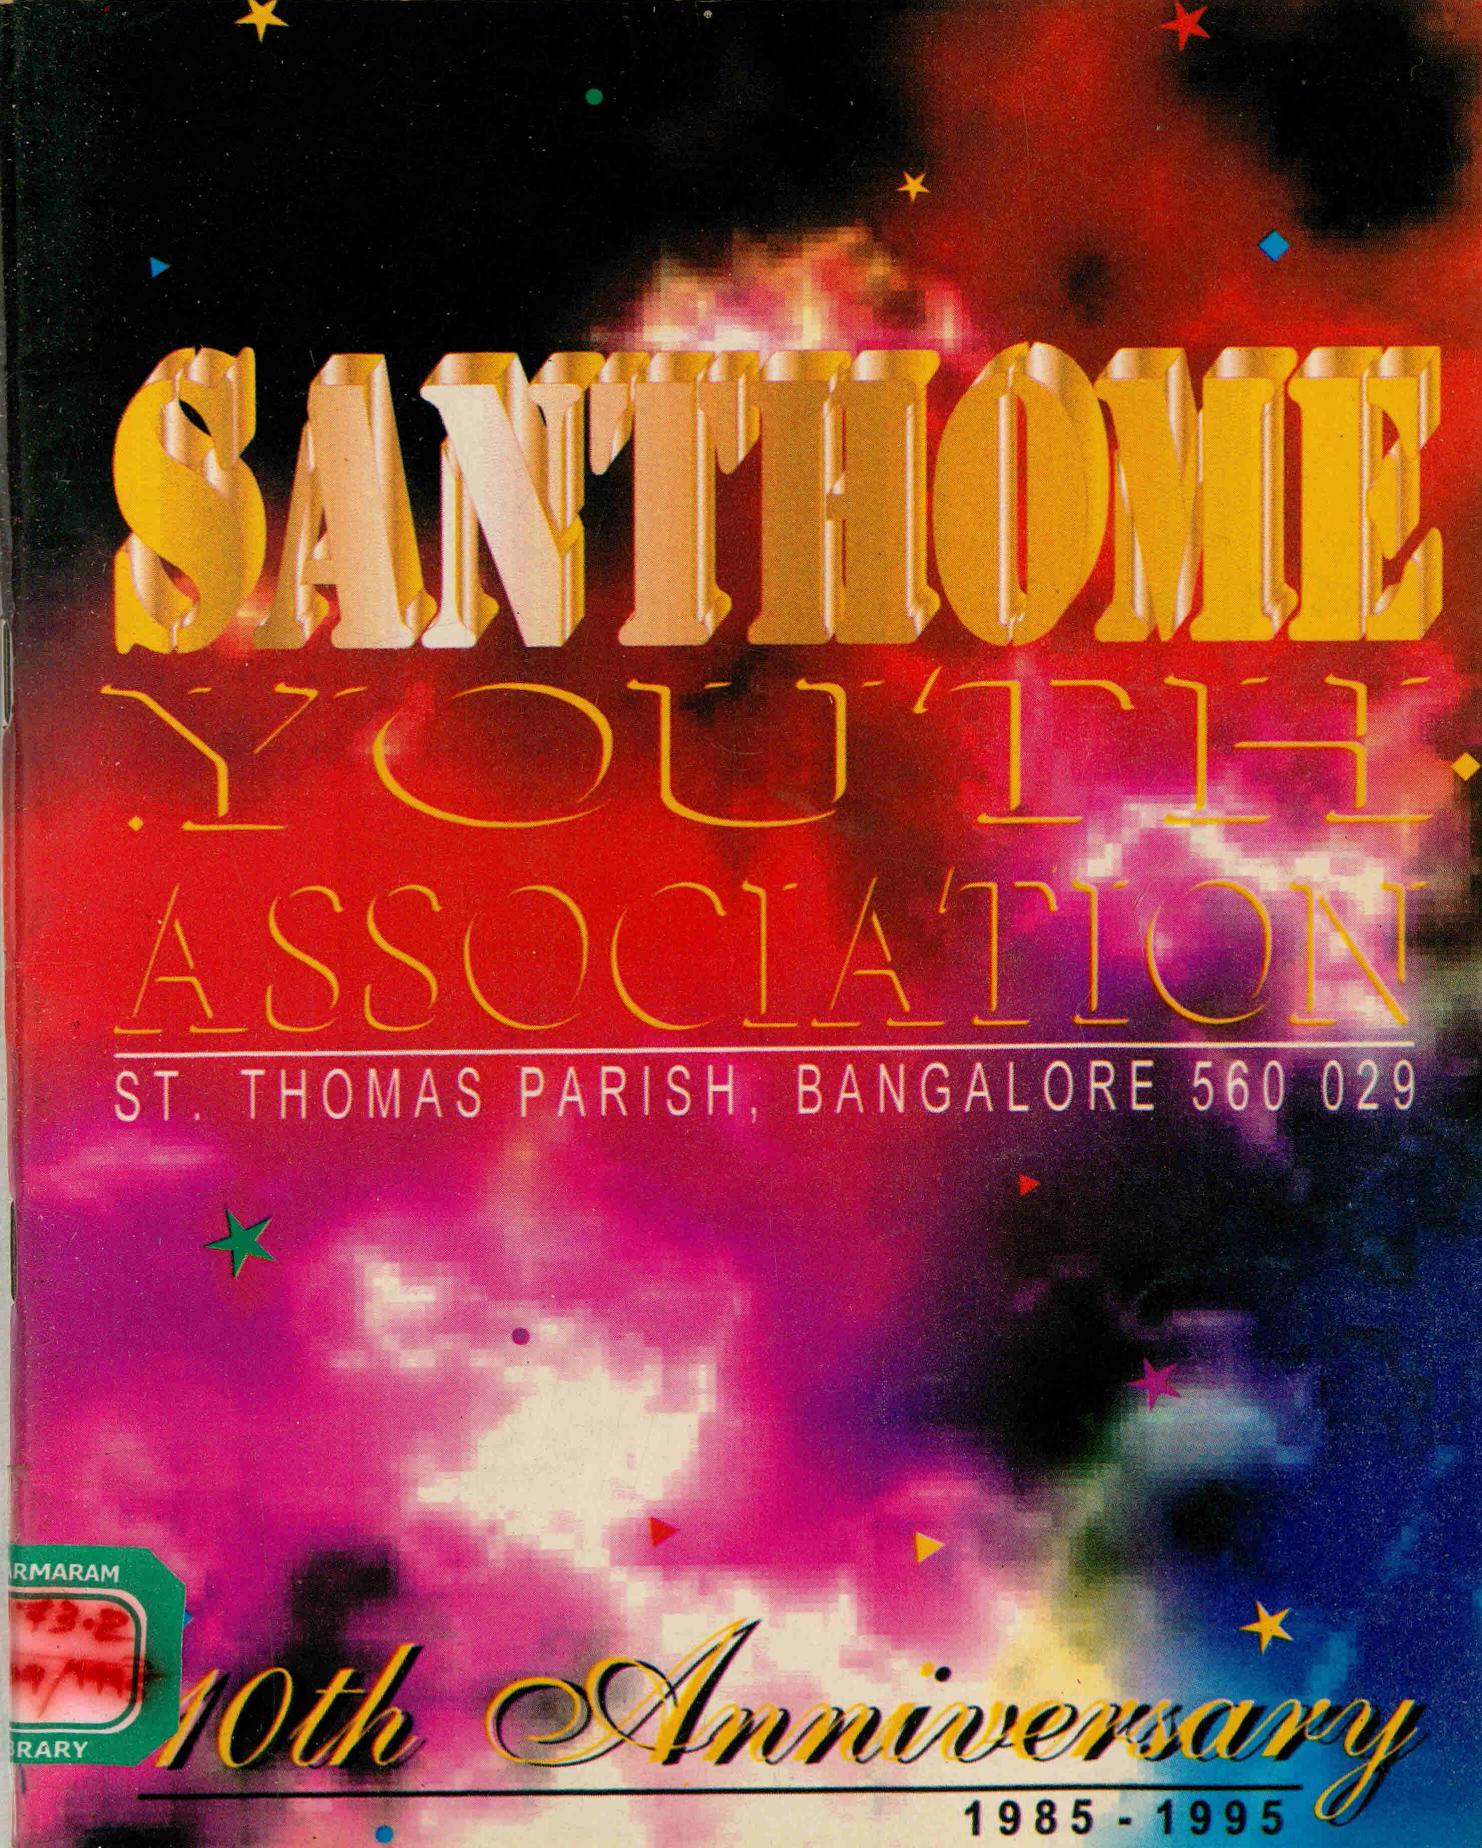 1995 - Santhom Youth Association - 10th Anniversary Souvenir